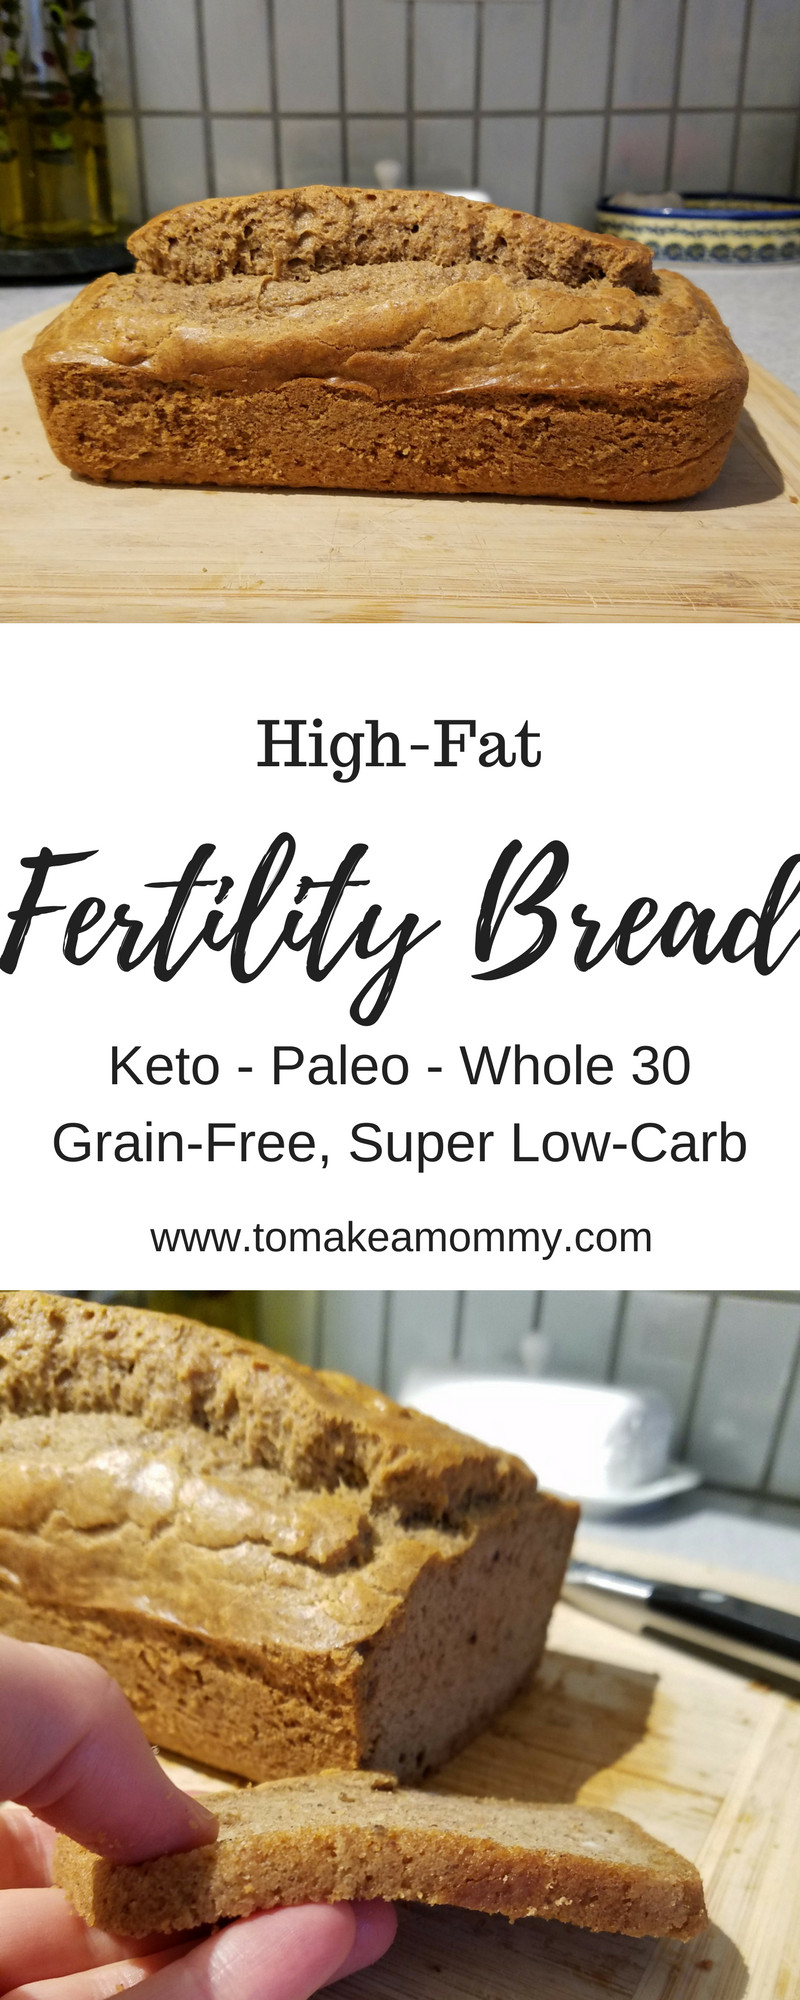 Keto Bread Whole Foods
 High Fat Fertility Bread Recipe Keto Paleo Whole 30